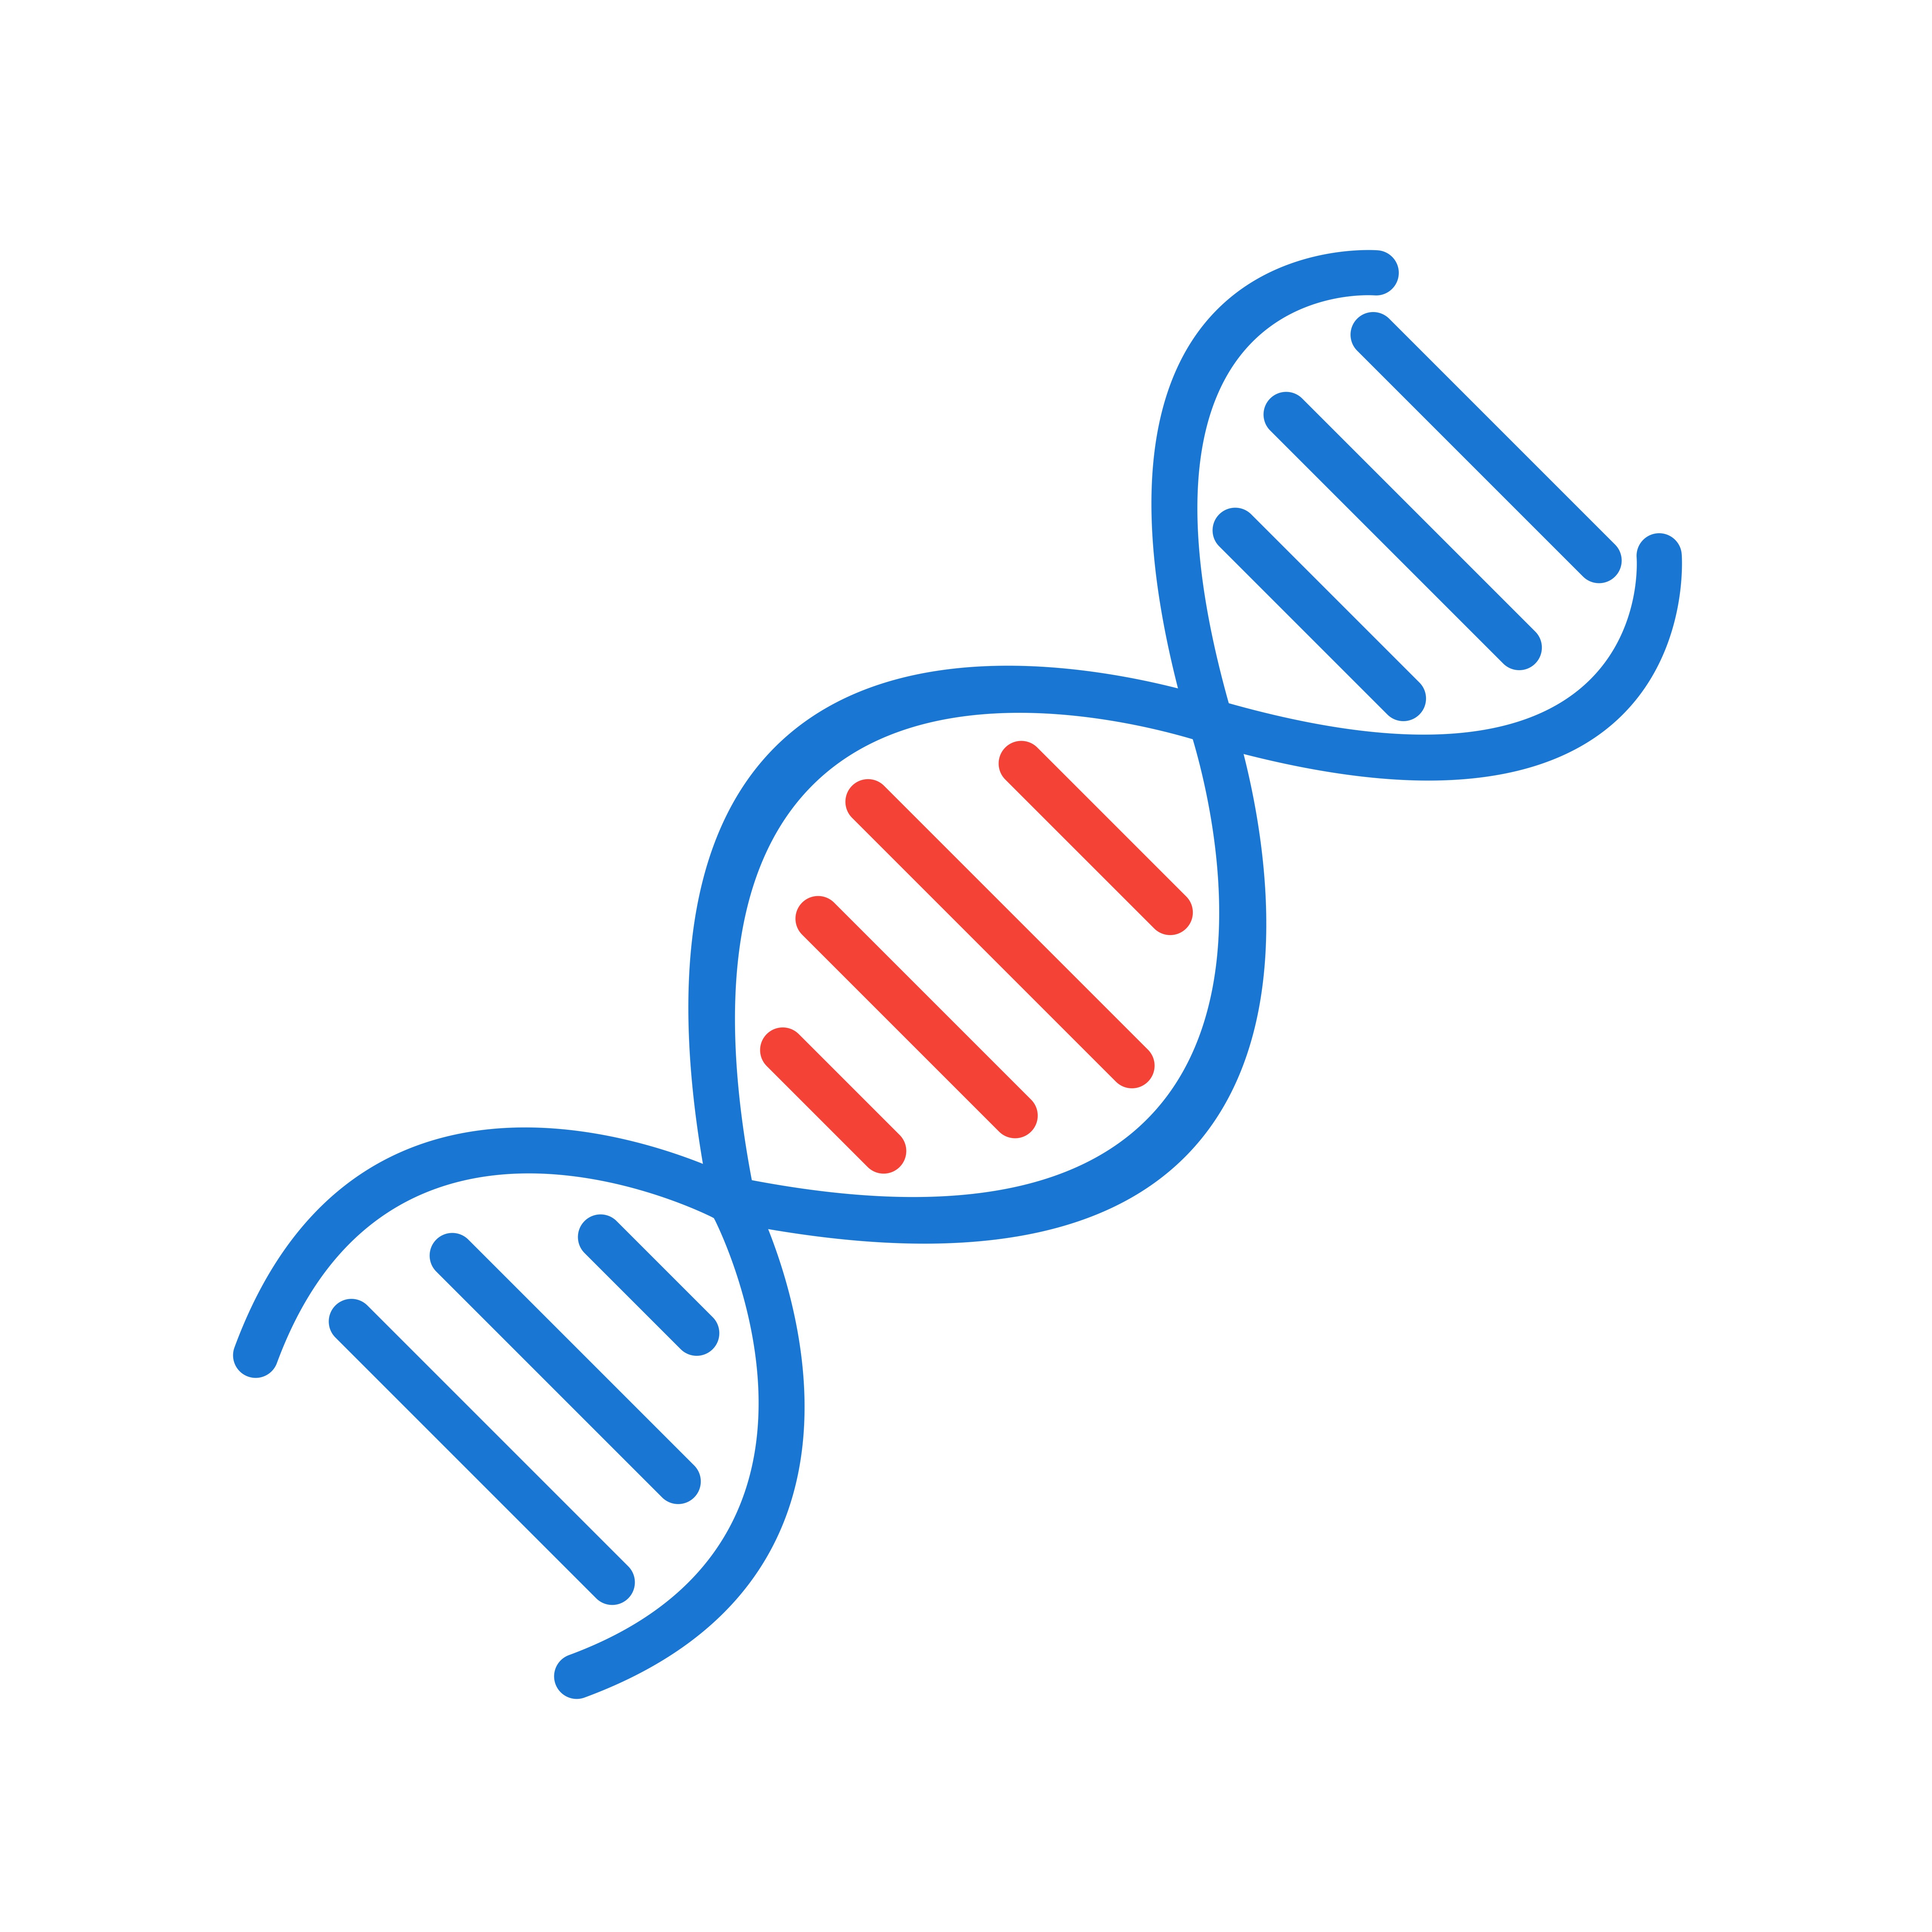 DNA Icon Design - Download Free Vectors, Clipart Graphics & Vector Art